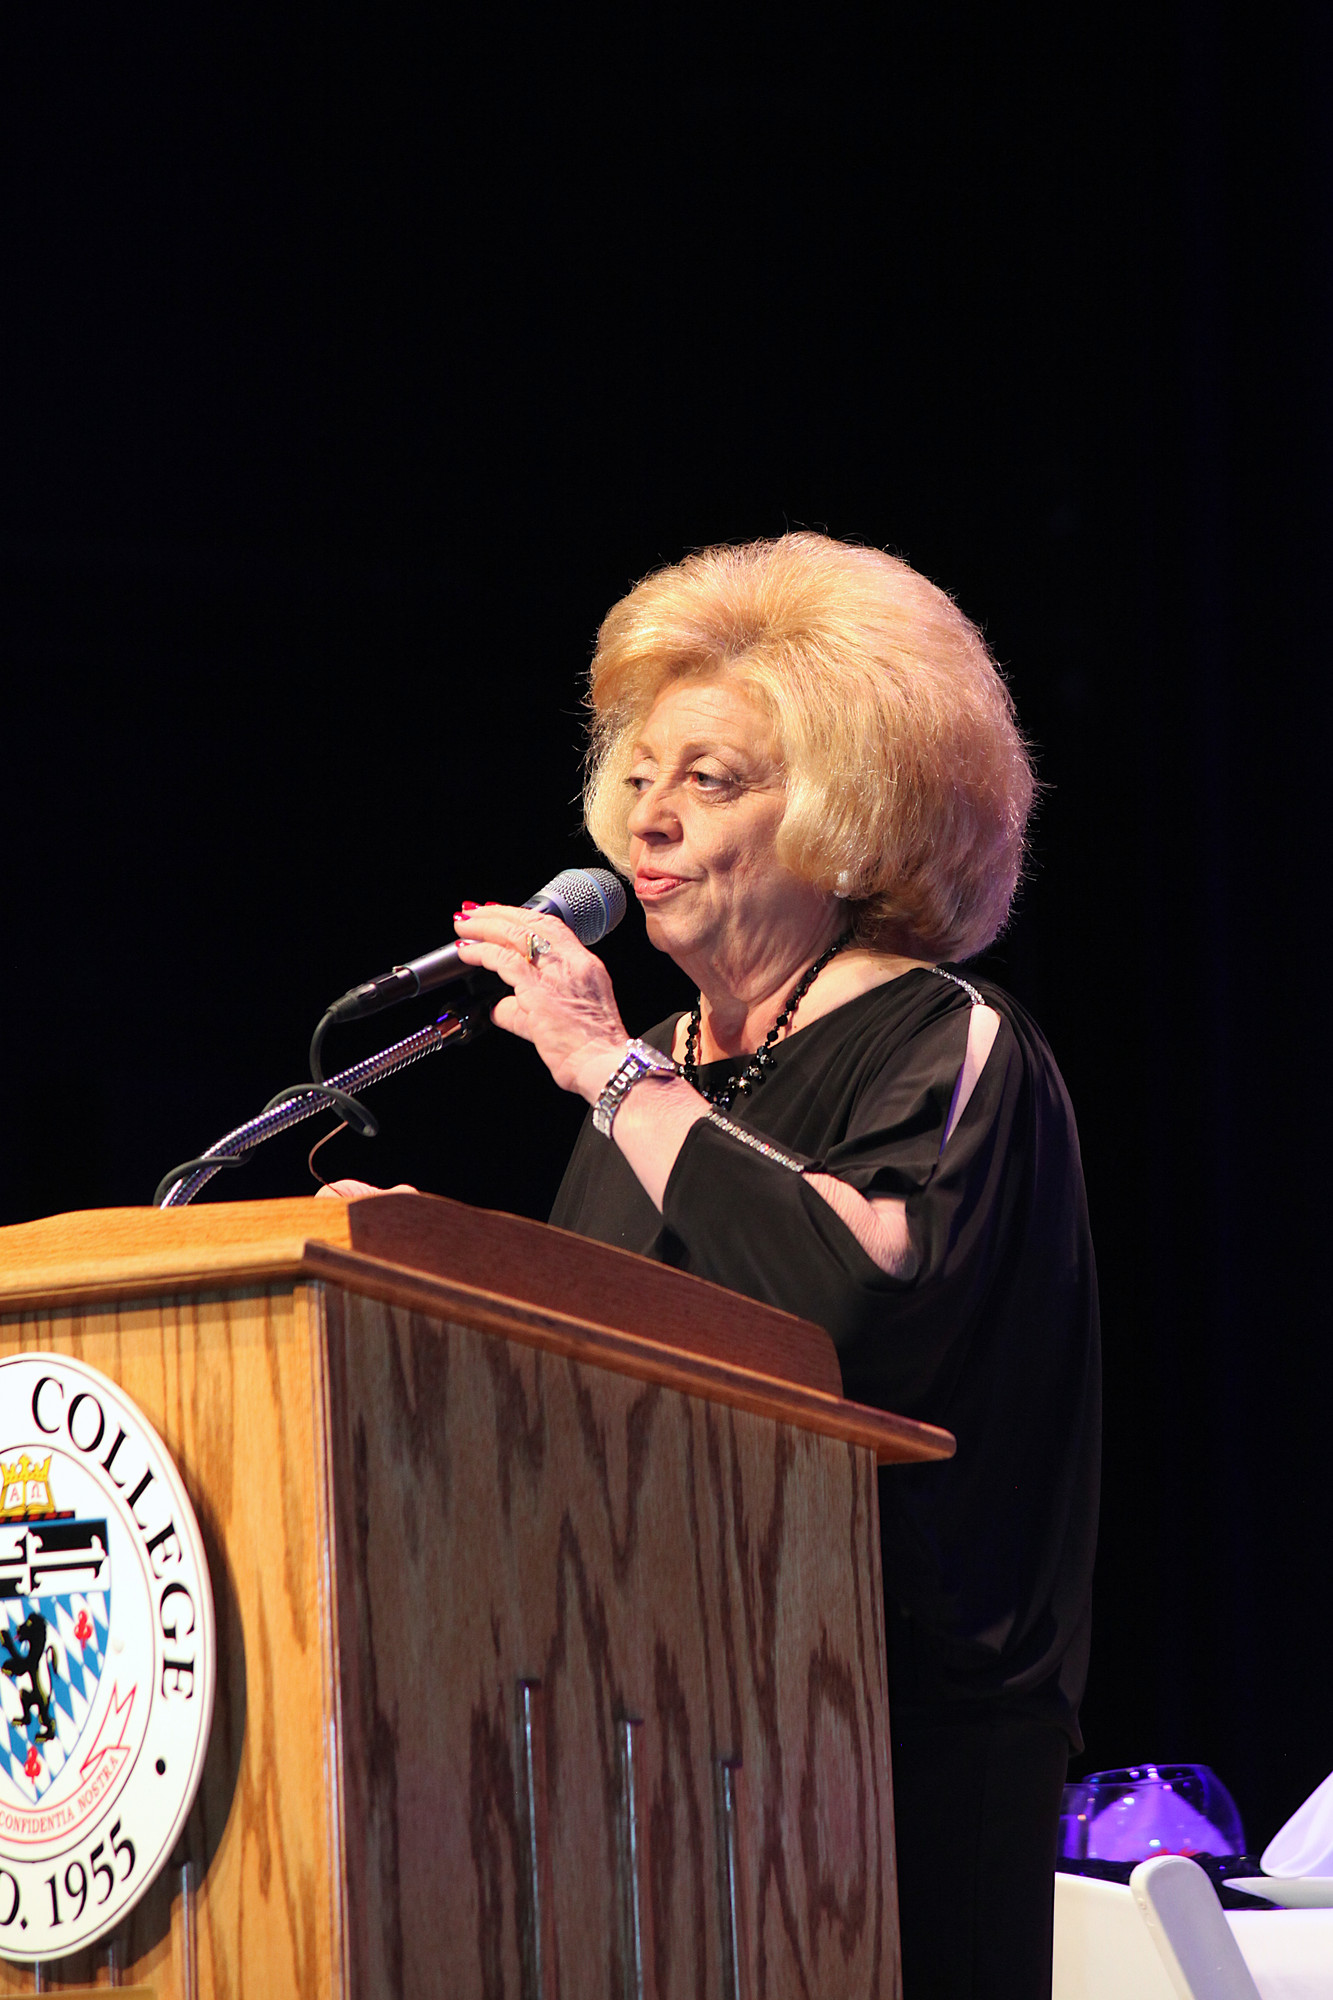 Joan Waldman thanked everyone for honoring her.